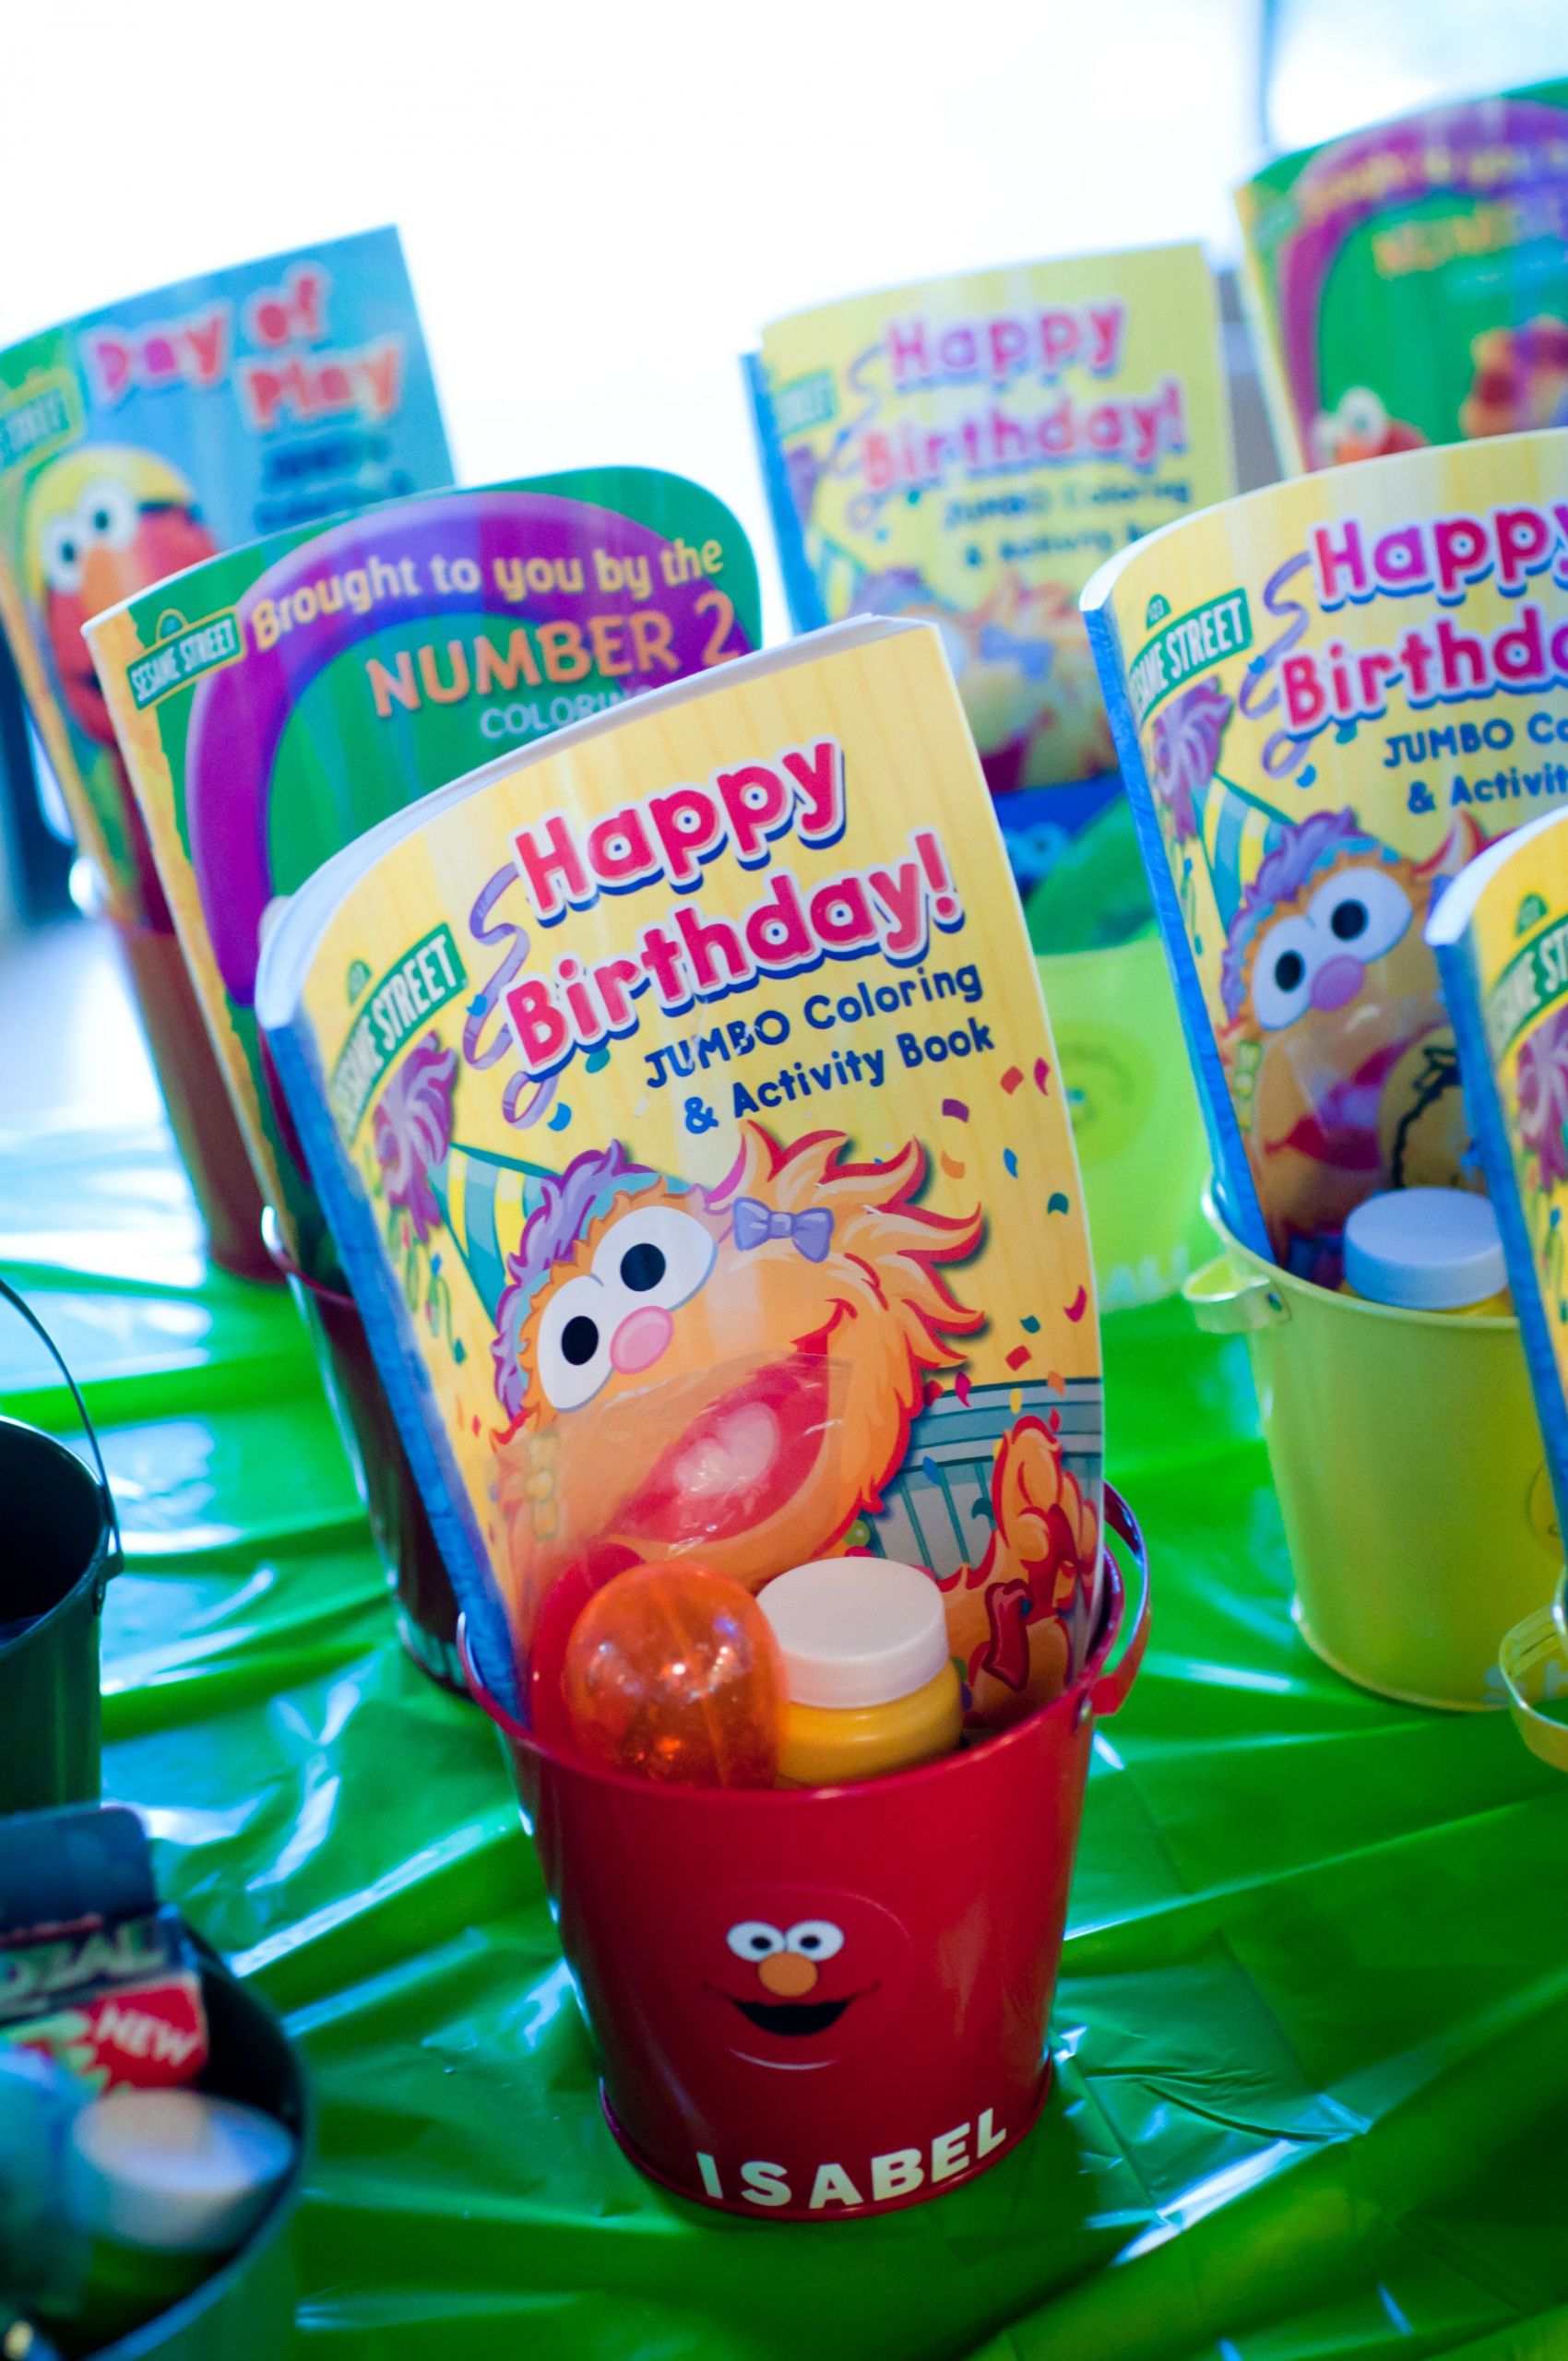 Sesame Street Birthday Party Supplies
 Sesame Street Party Favors